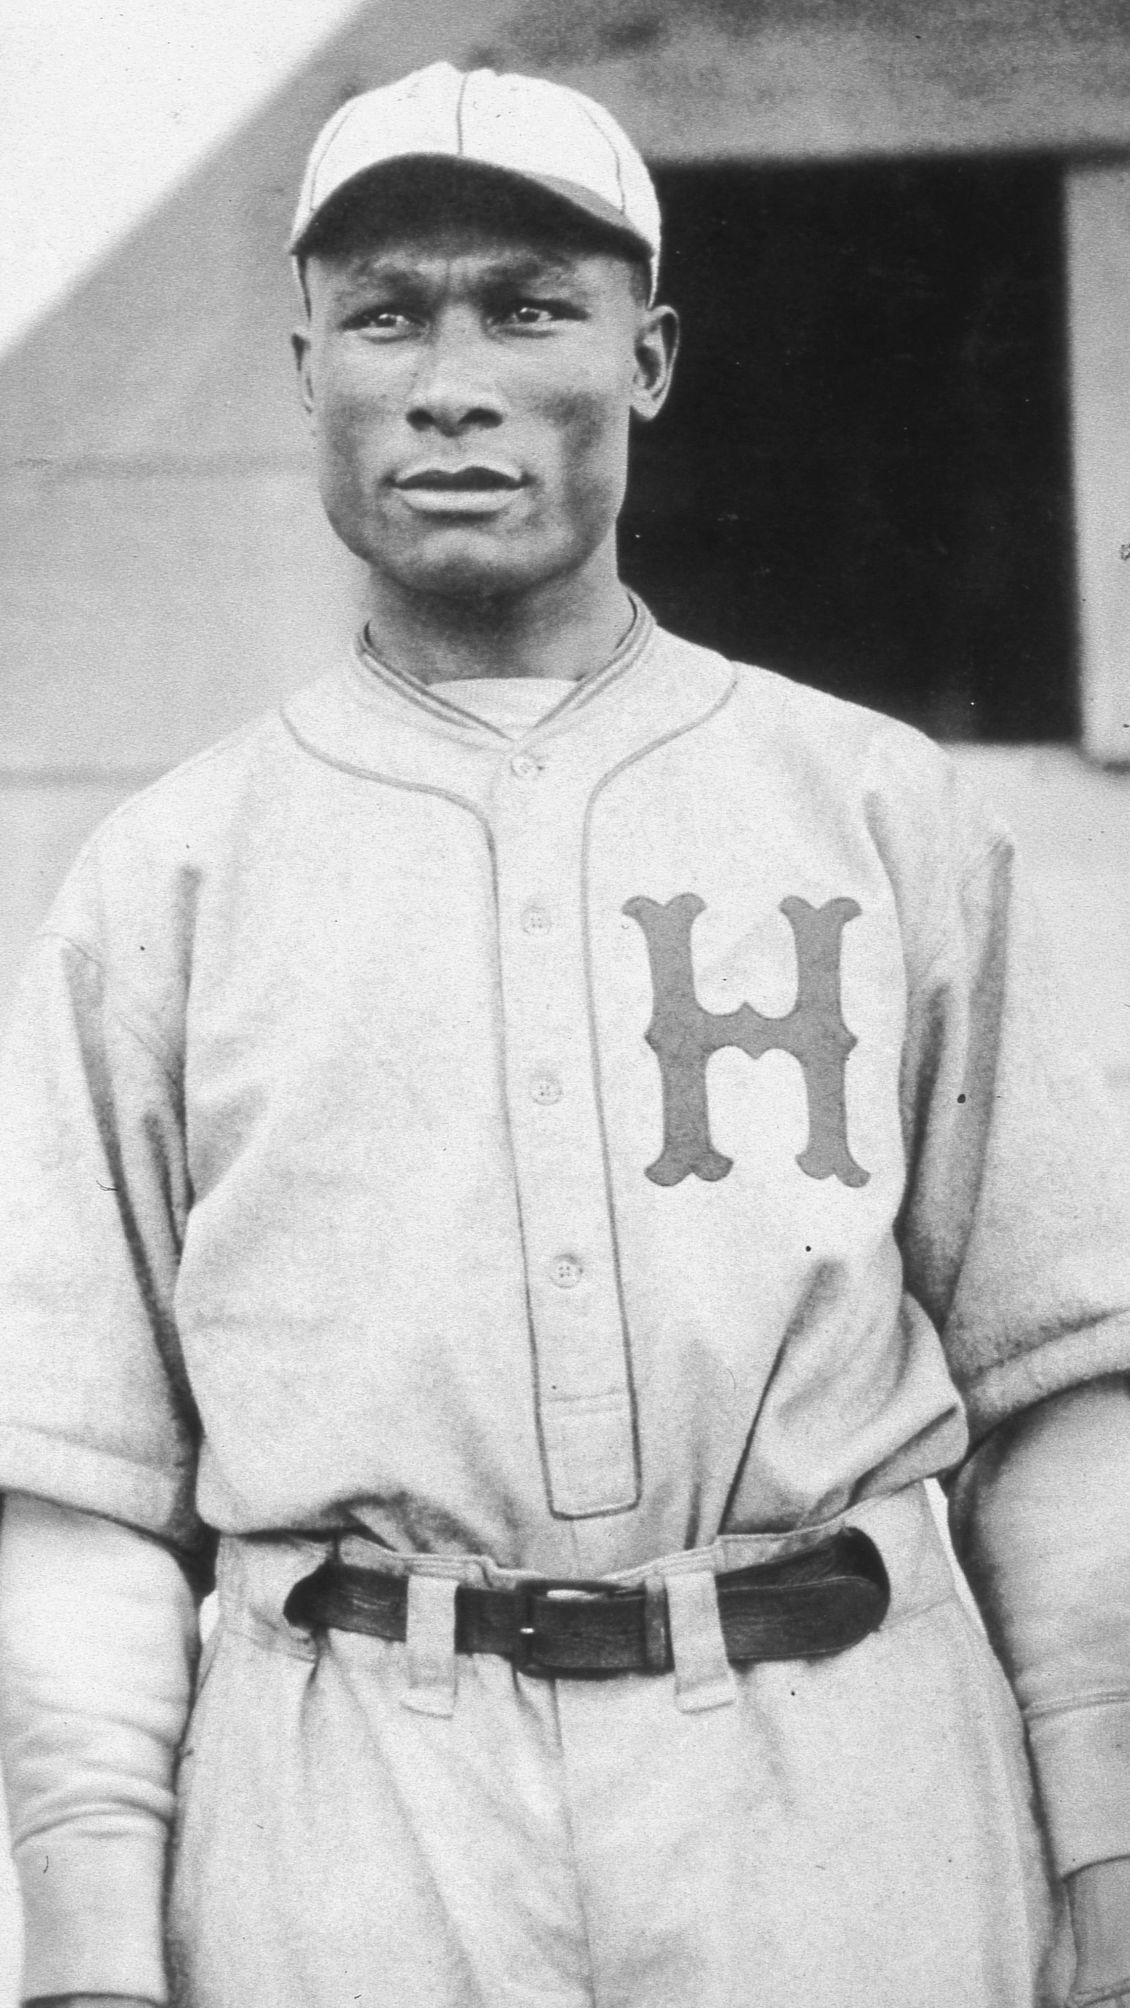 charlie “chino” smith in a baseball uniform.